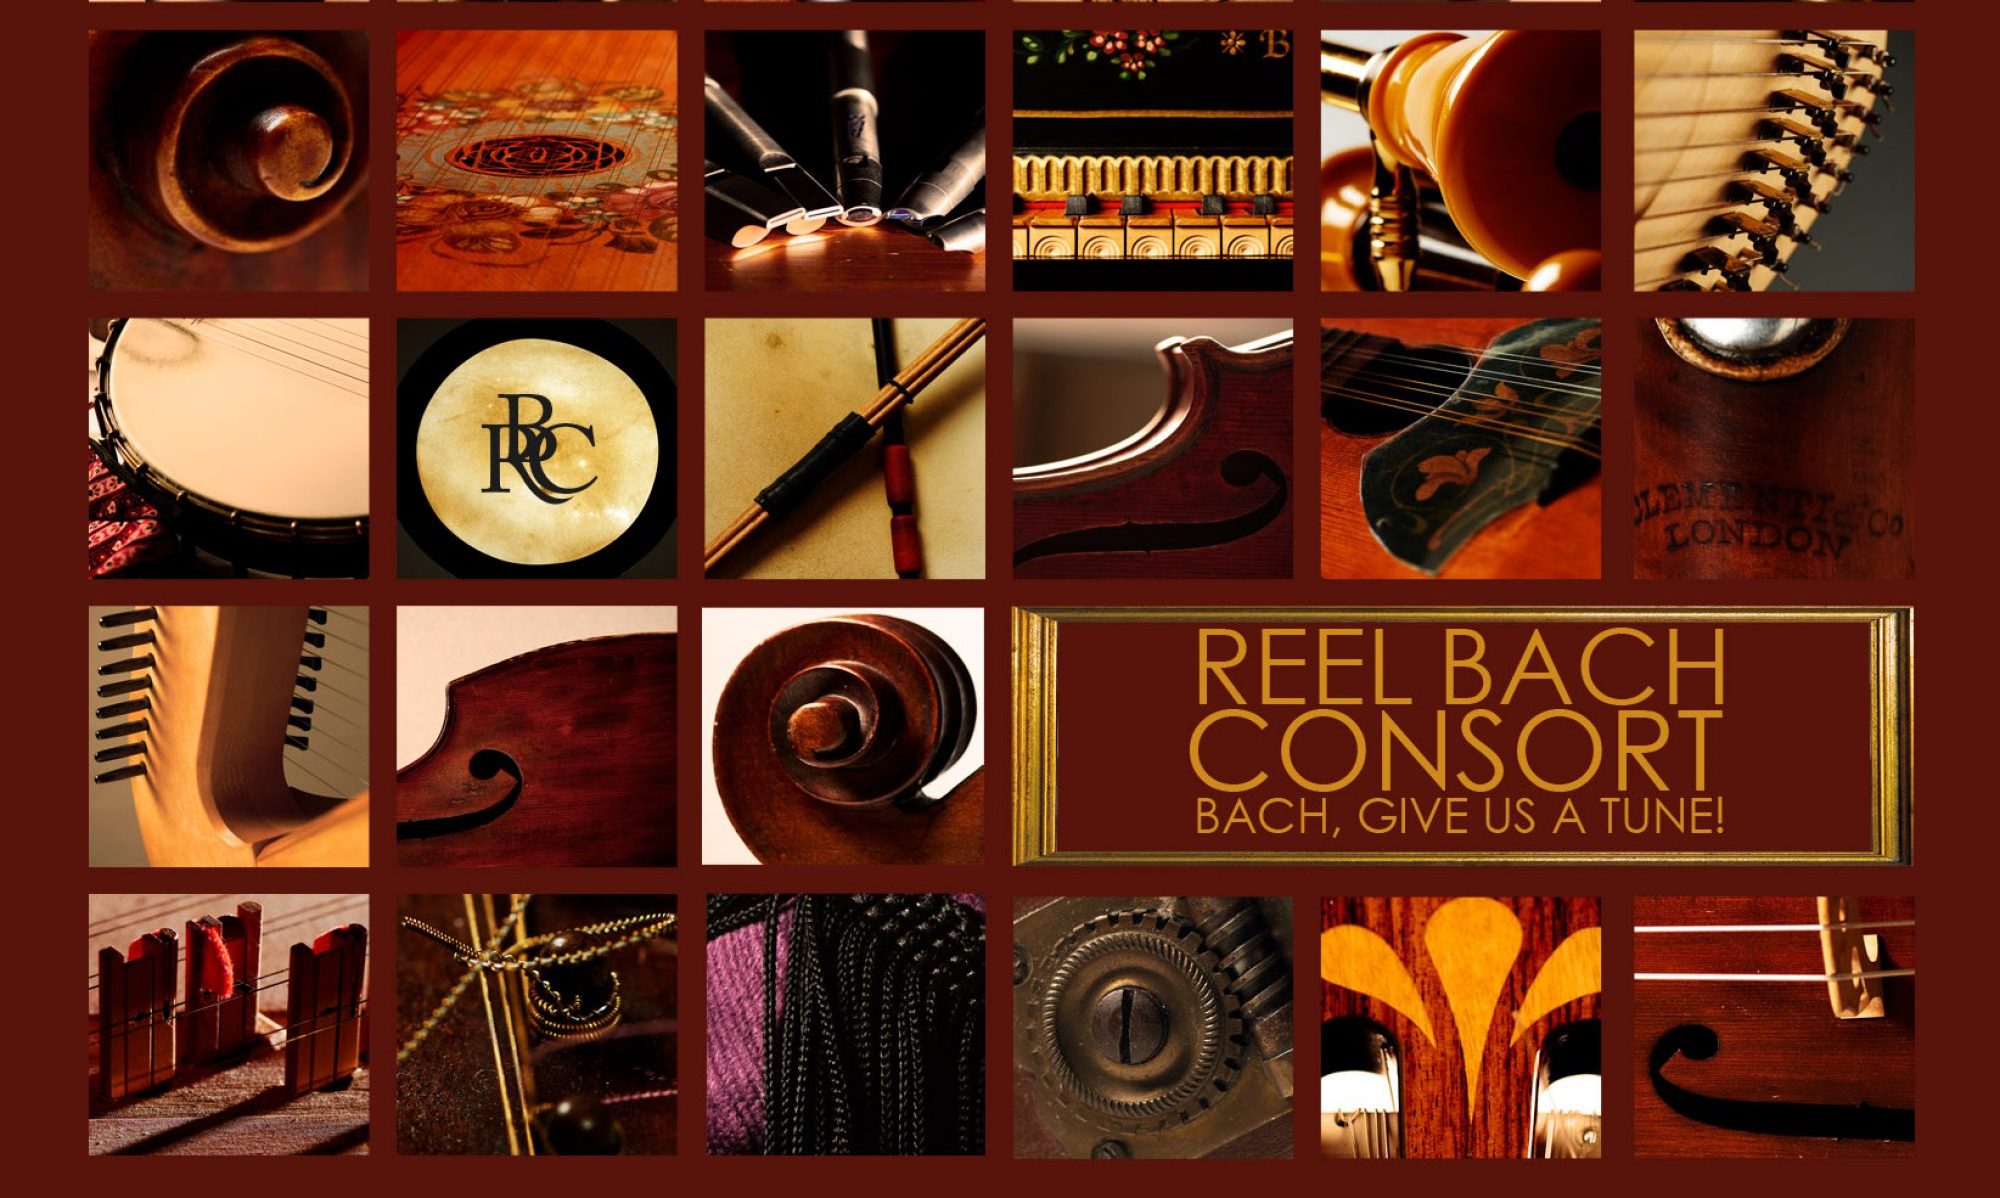 Reel Bach Consort